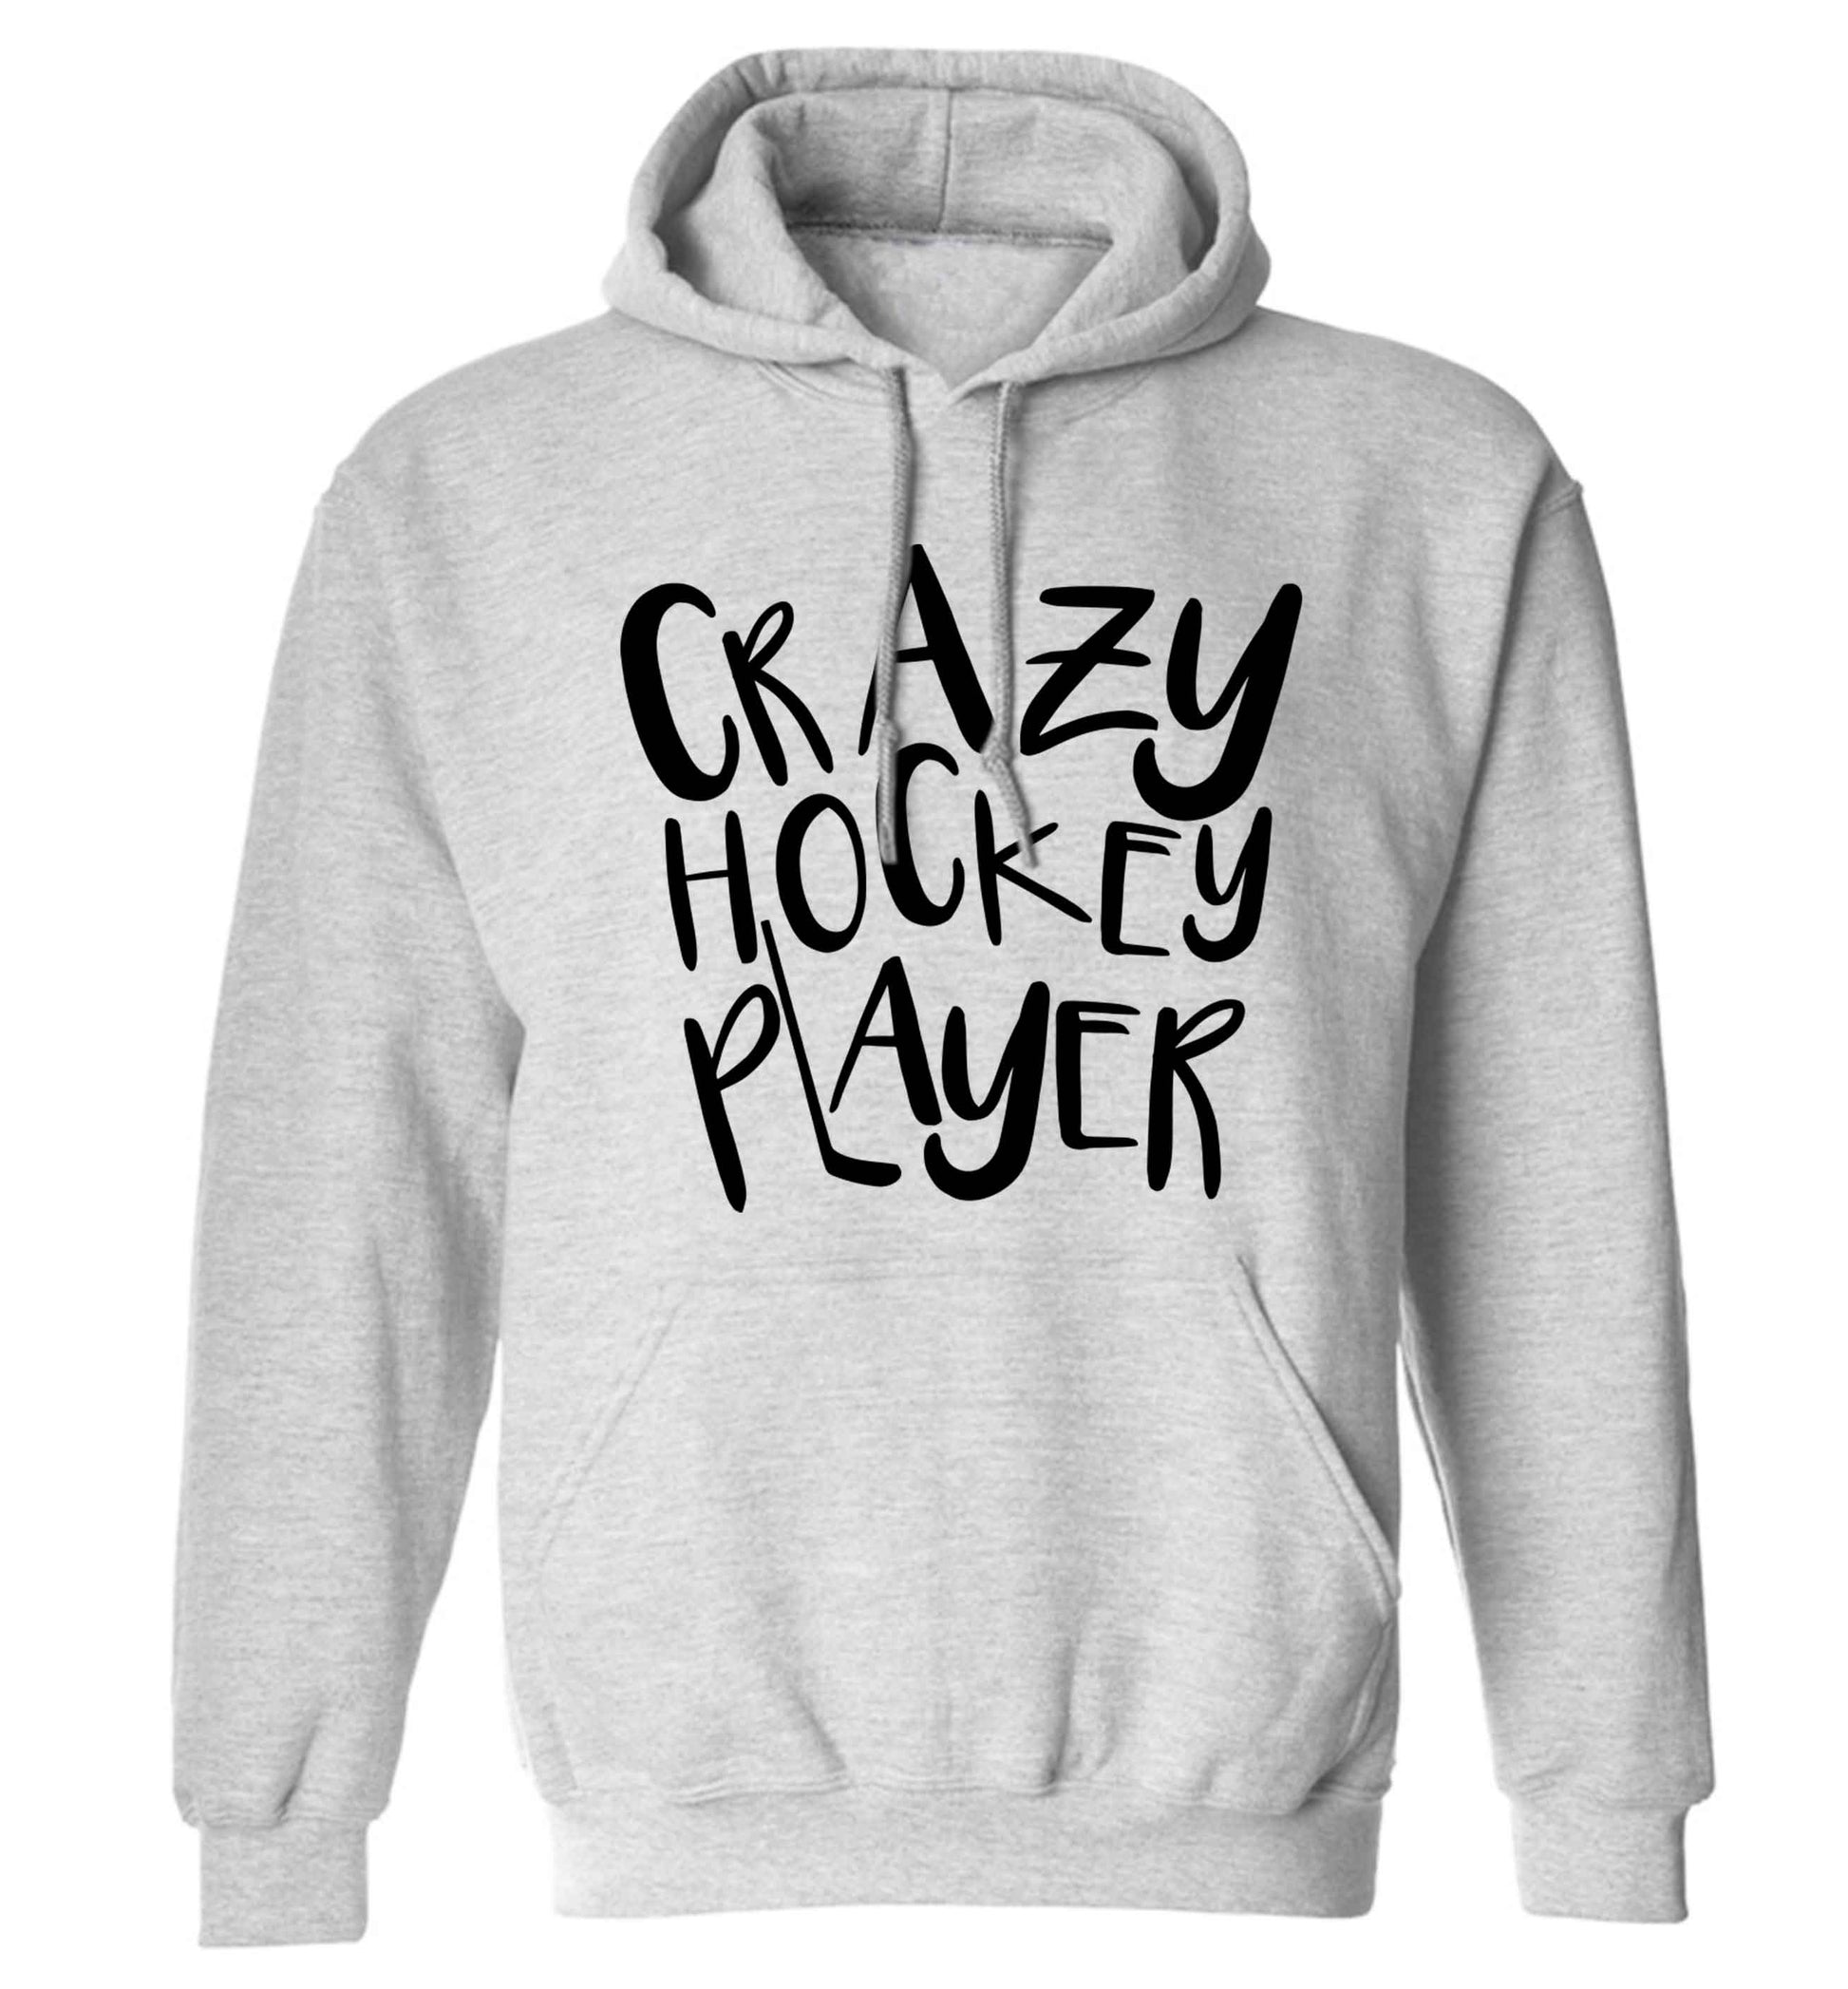 Crazy hockey player adults unisex grey hoodie 2XL